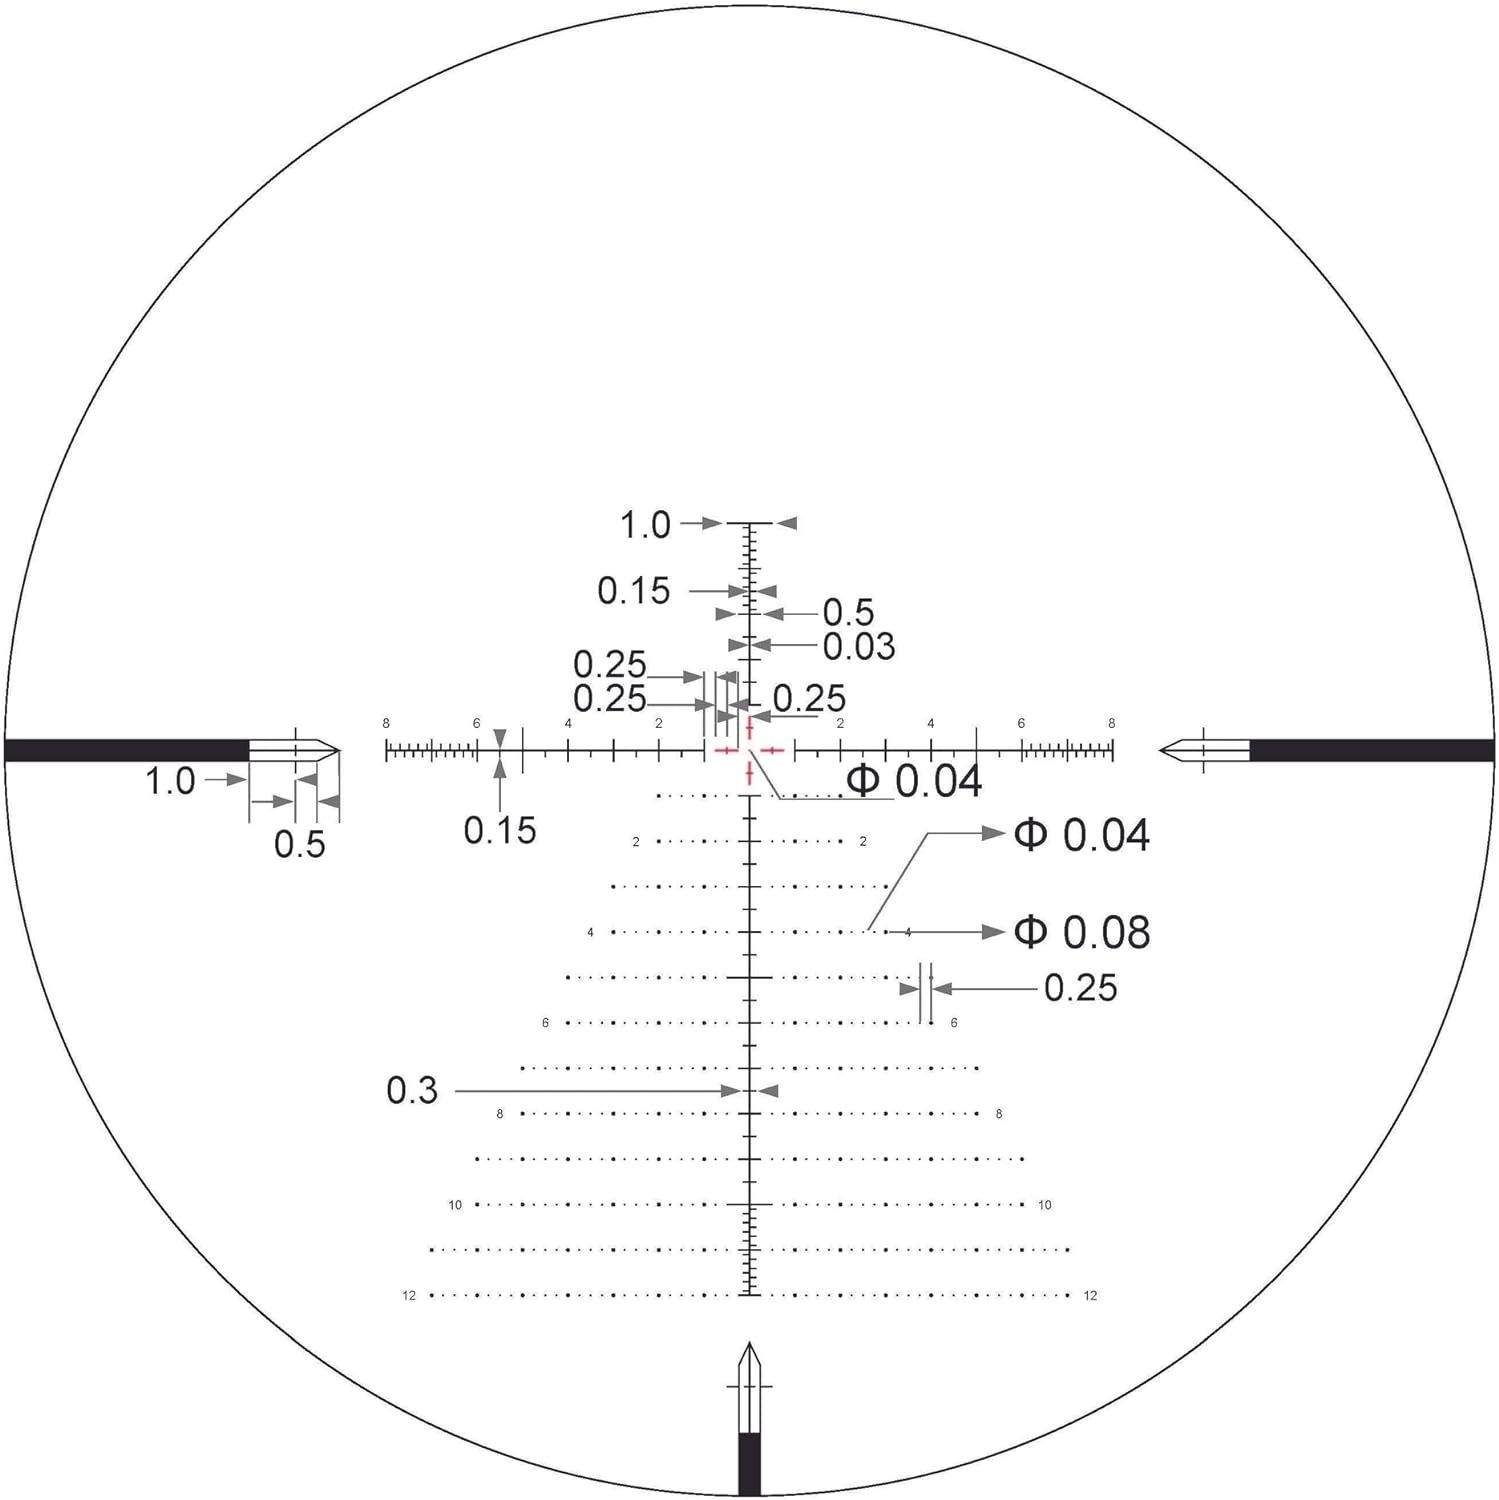 Arken Optics Cannocchiale da puntamento SH4 GEN2 4-16x50 VPR MIL